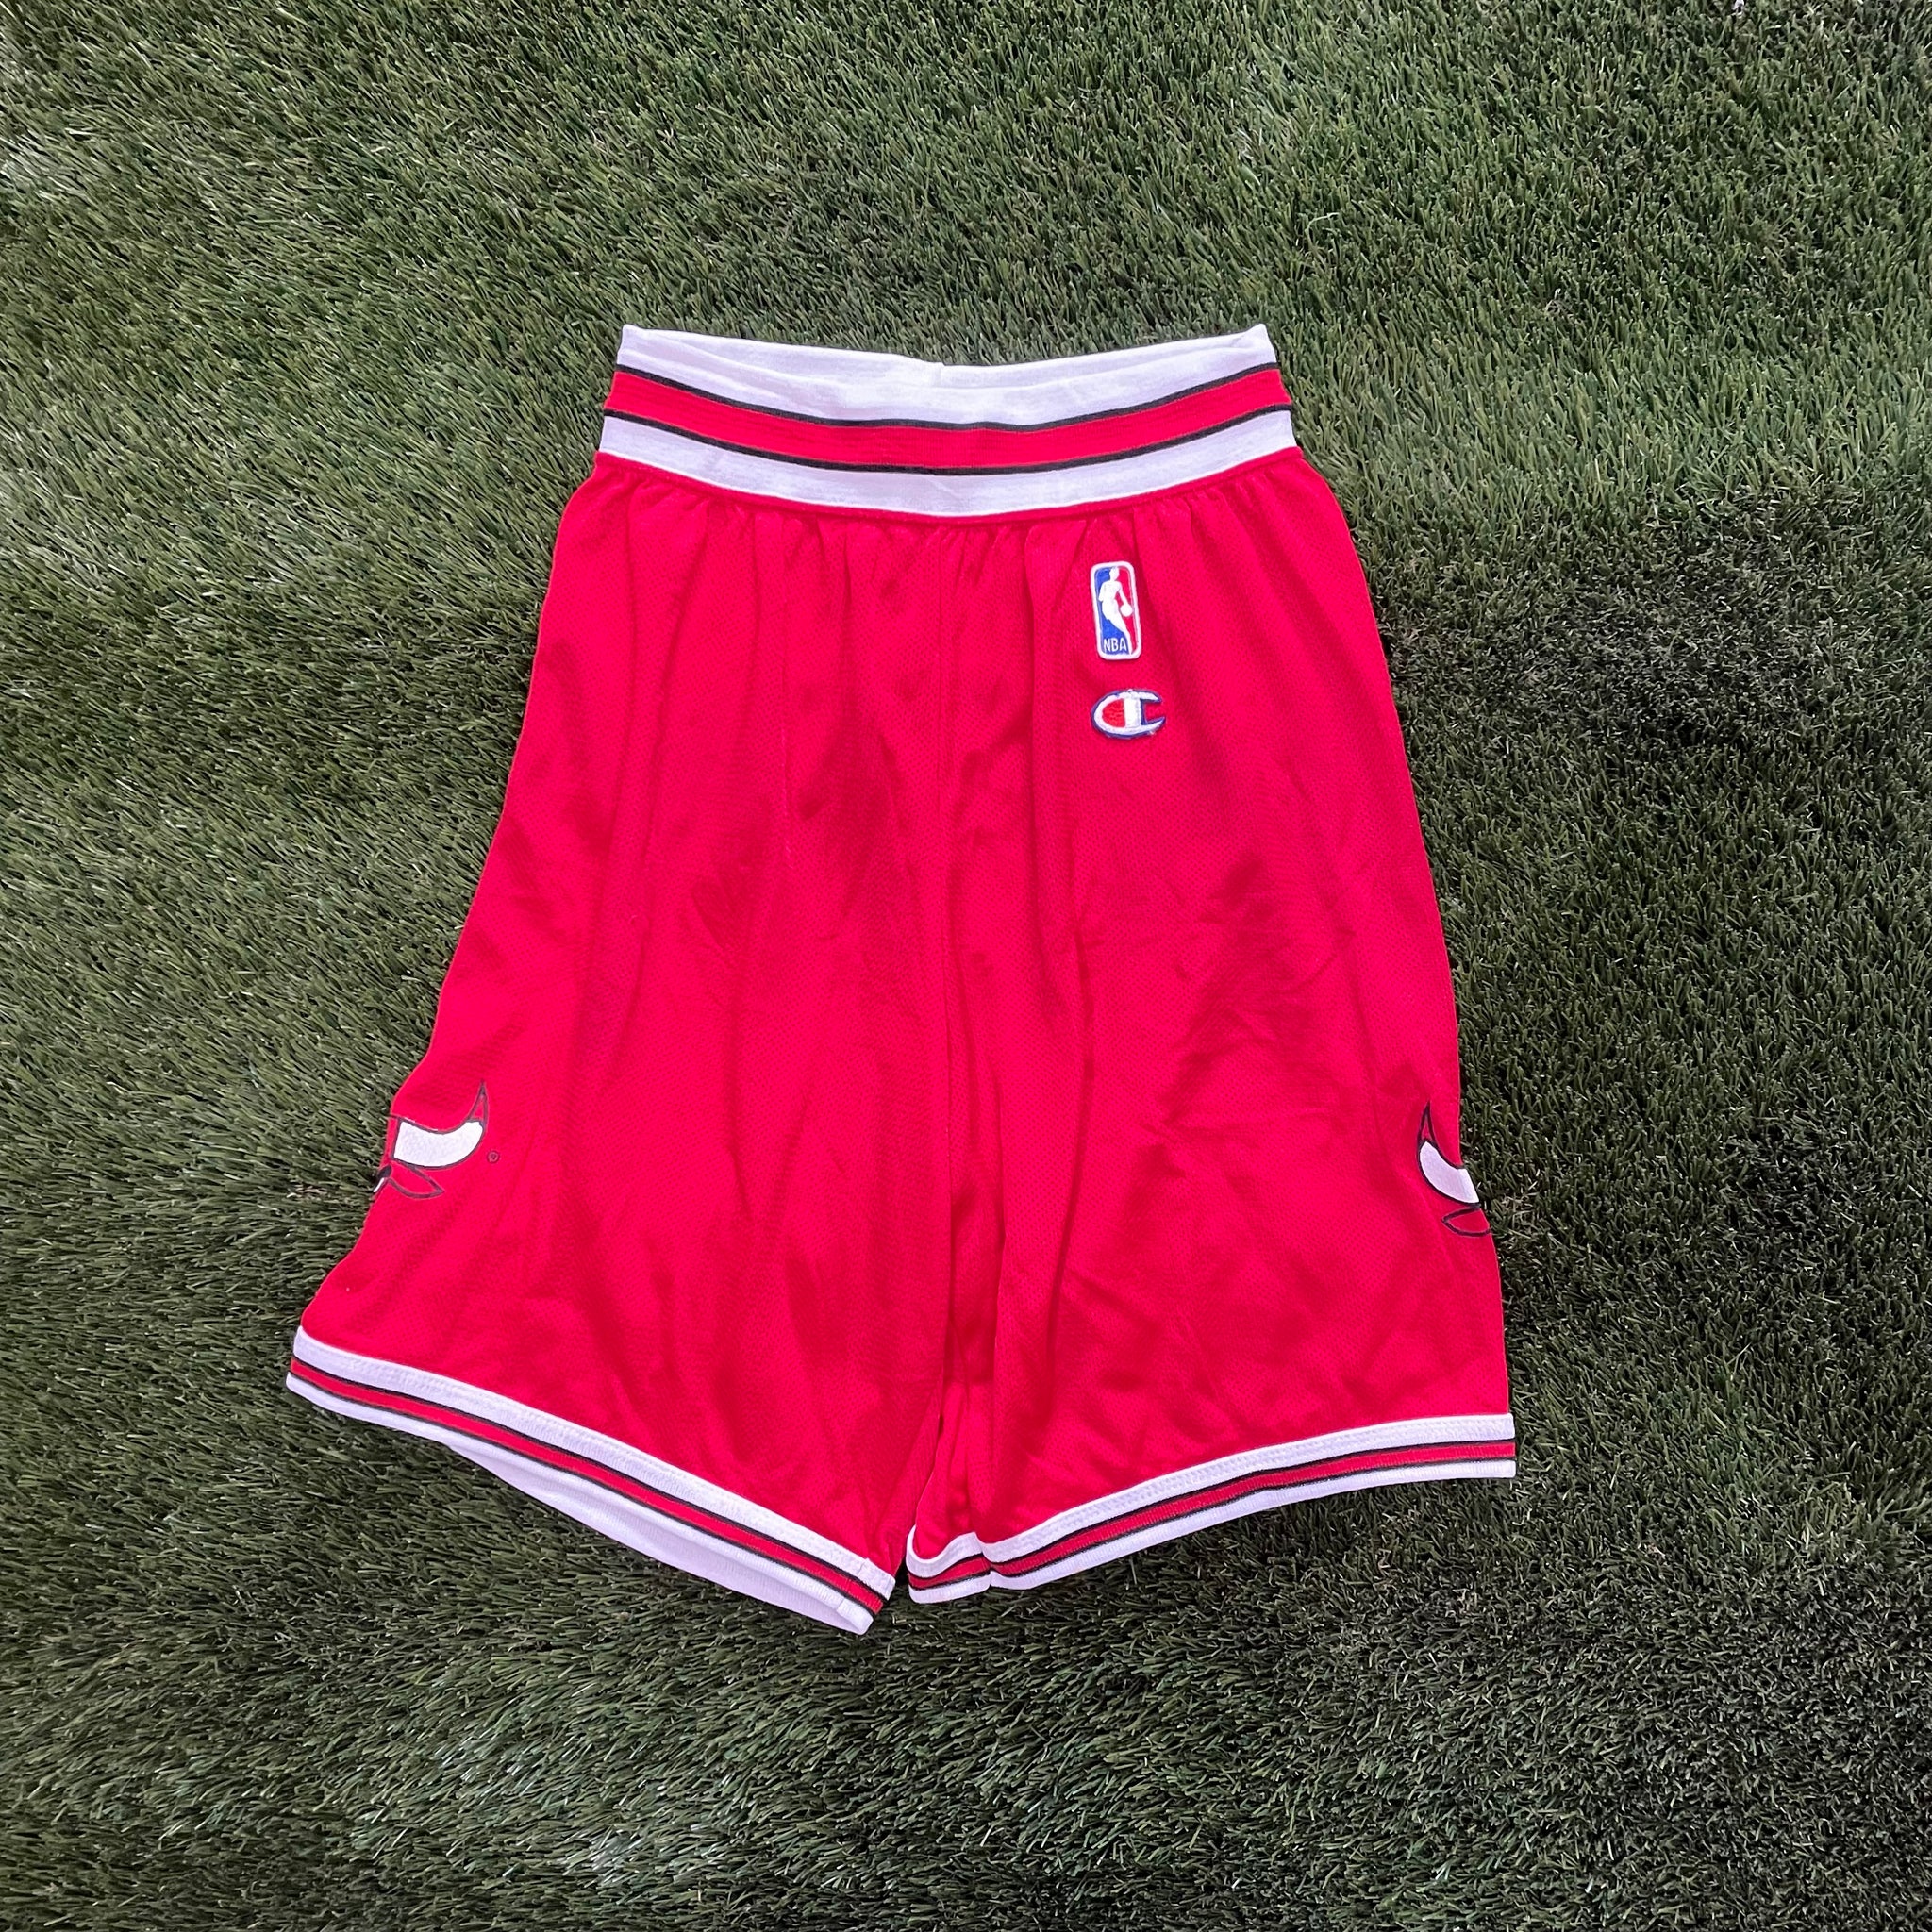 90s basketball shorts